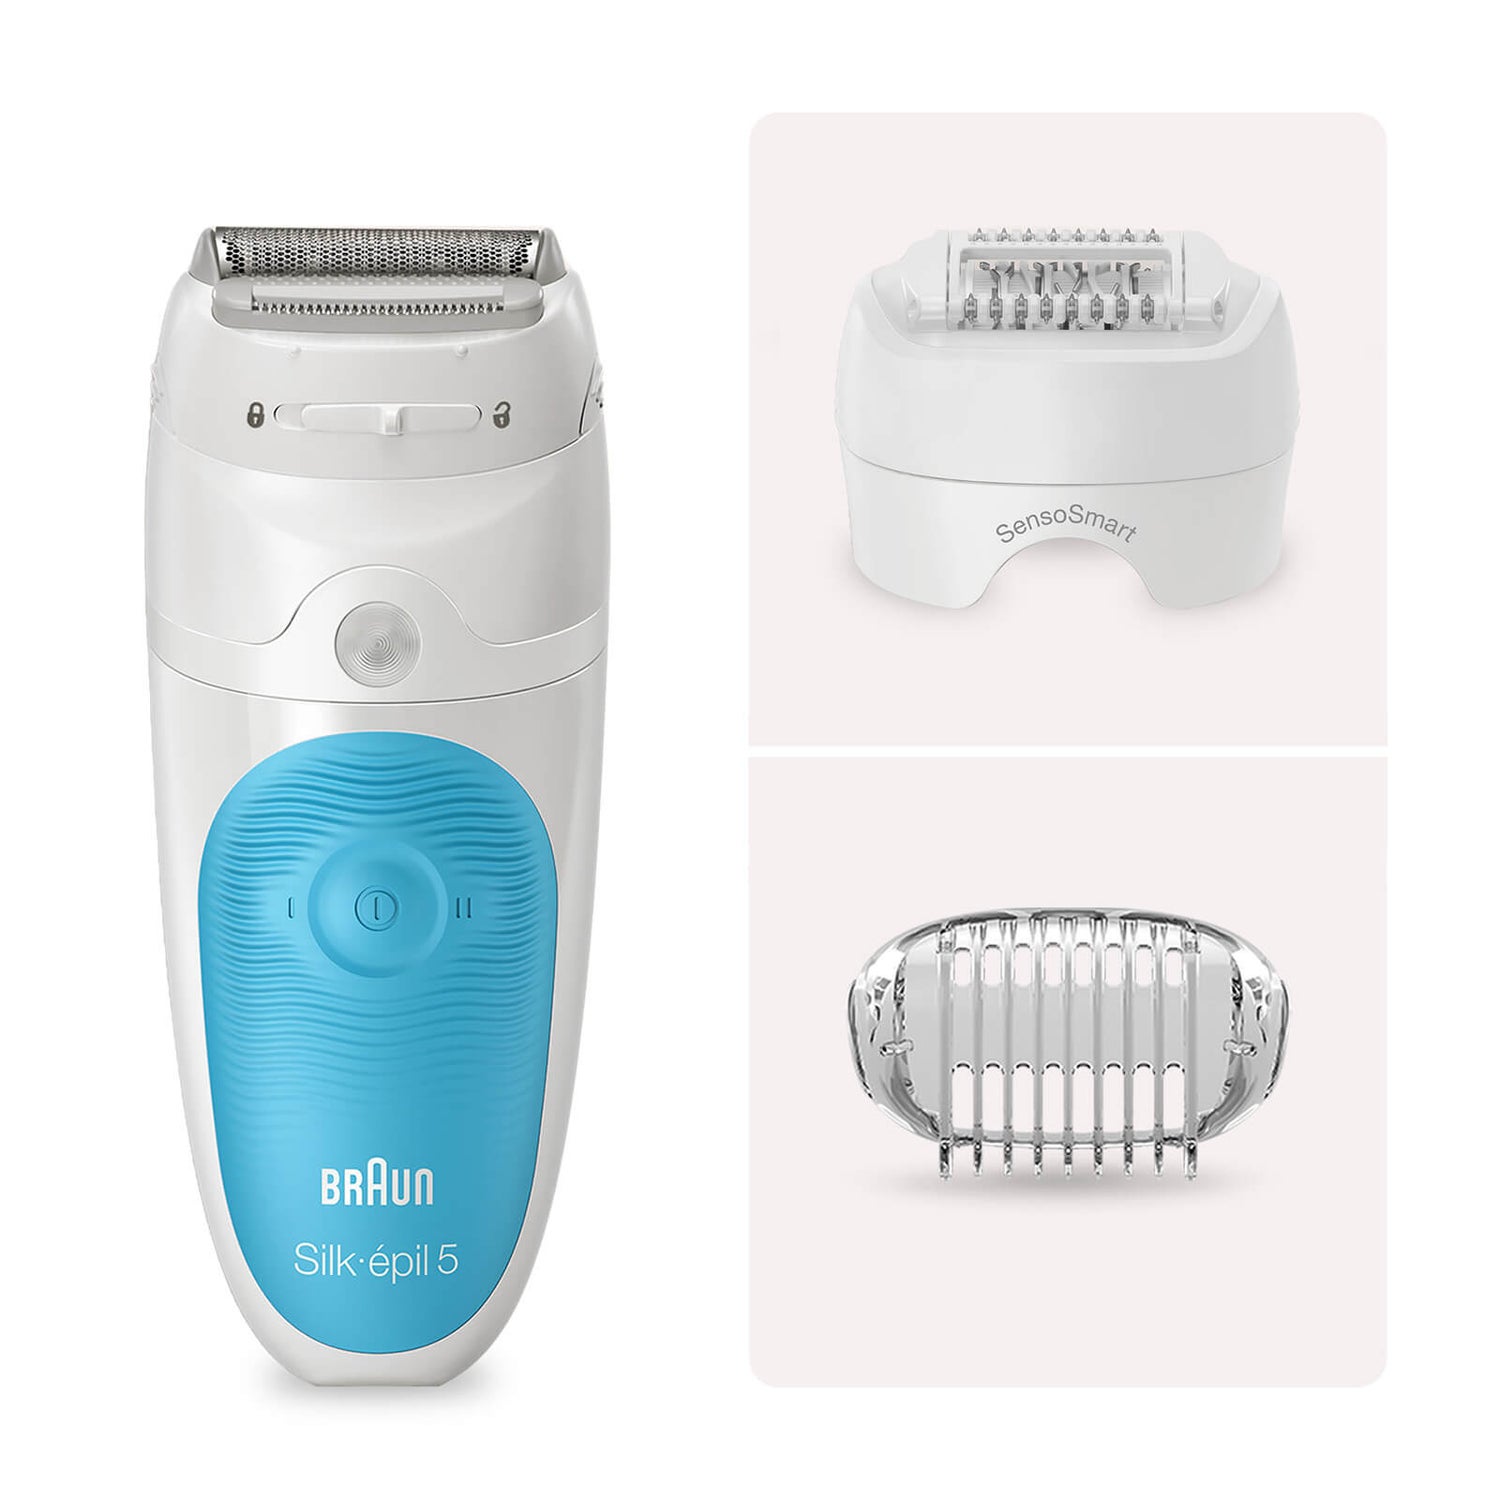 Braun Silk-épil 5 5-605, Epilator for Beginners for Gentle Hair Removal, White/Turquoise